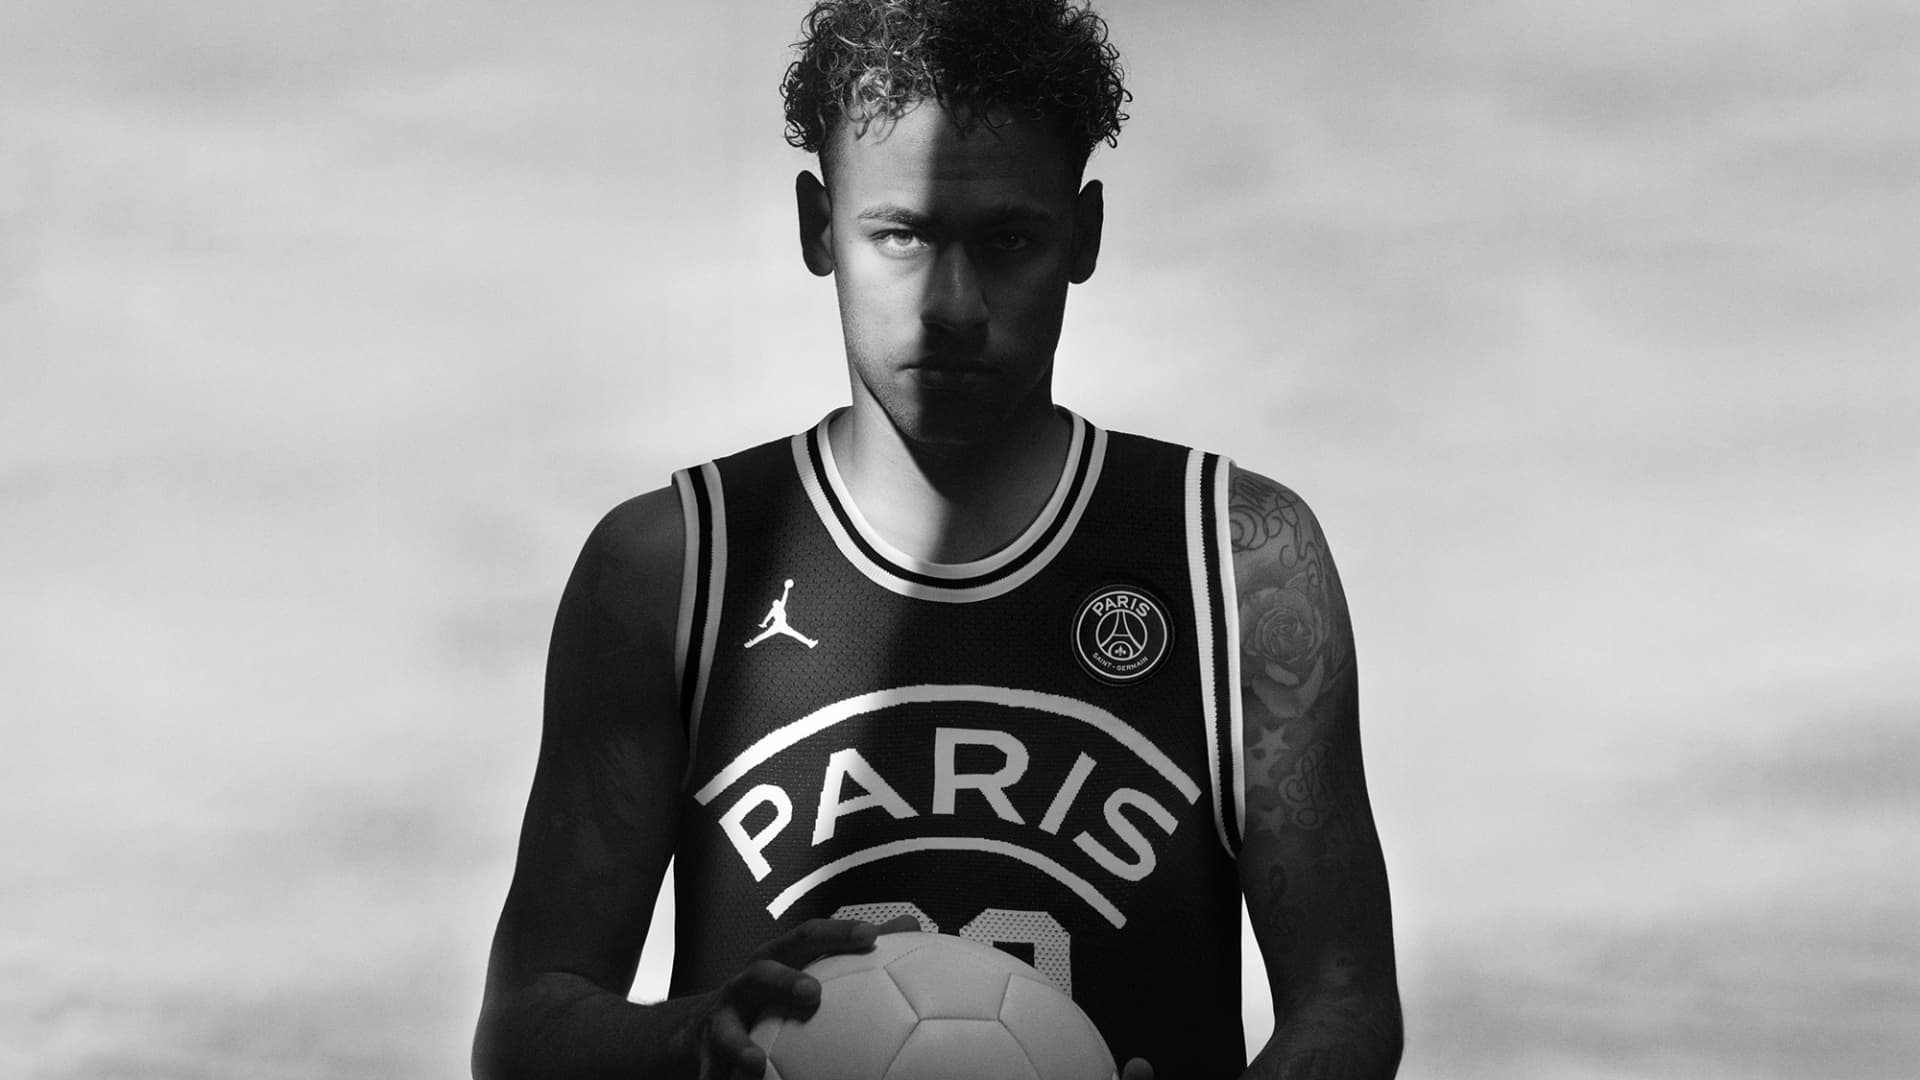 Nike Air paris x jordan Jordans pass basketball with Paris Saint-Germain soccer club